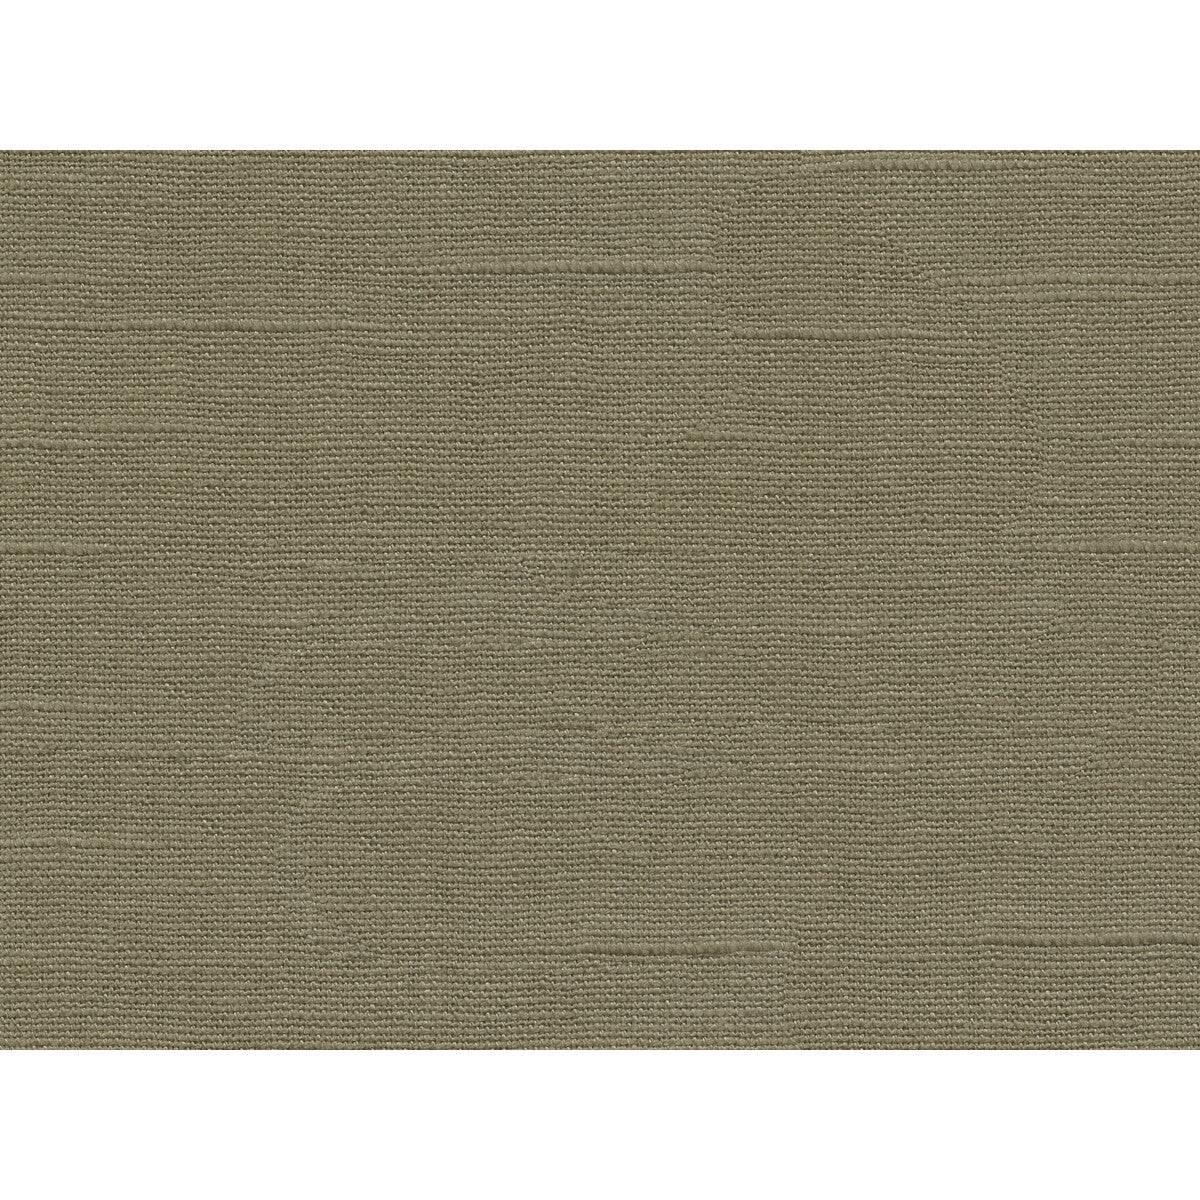 Kravet Smart fabric in 34960-6 color - pattern 34960.6.0 - by Kravet Smart in the Performance Kravetarmor collection